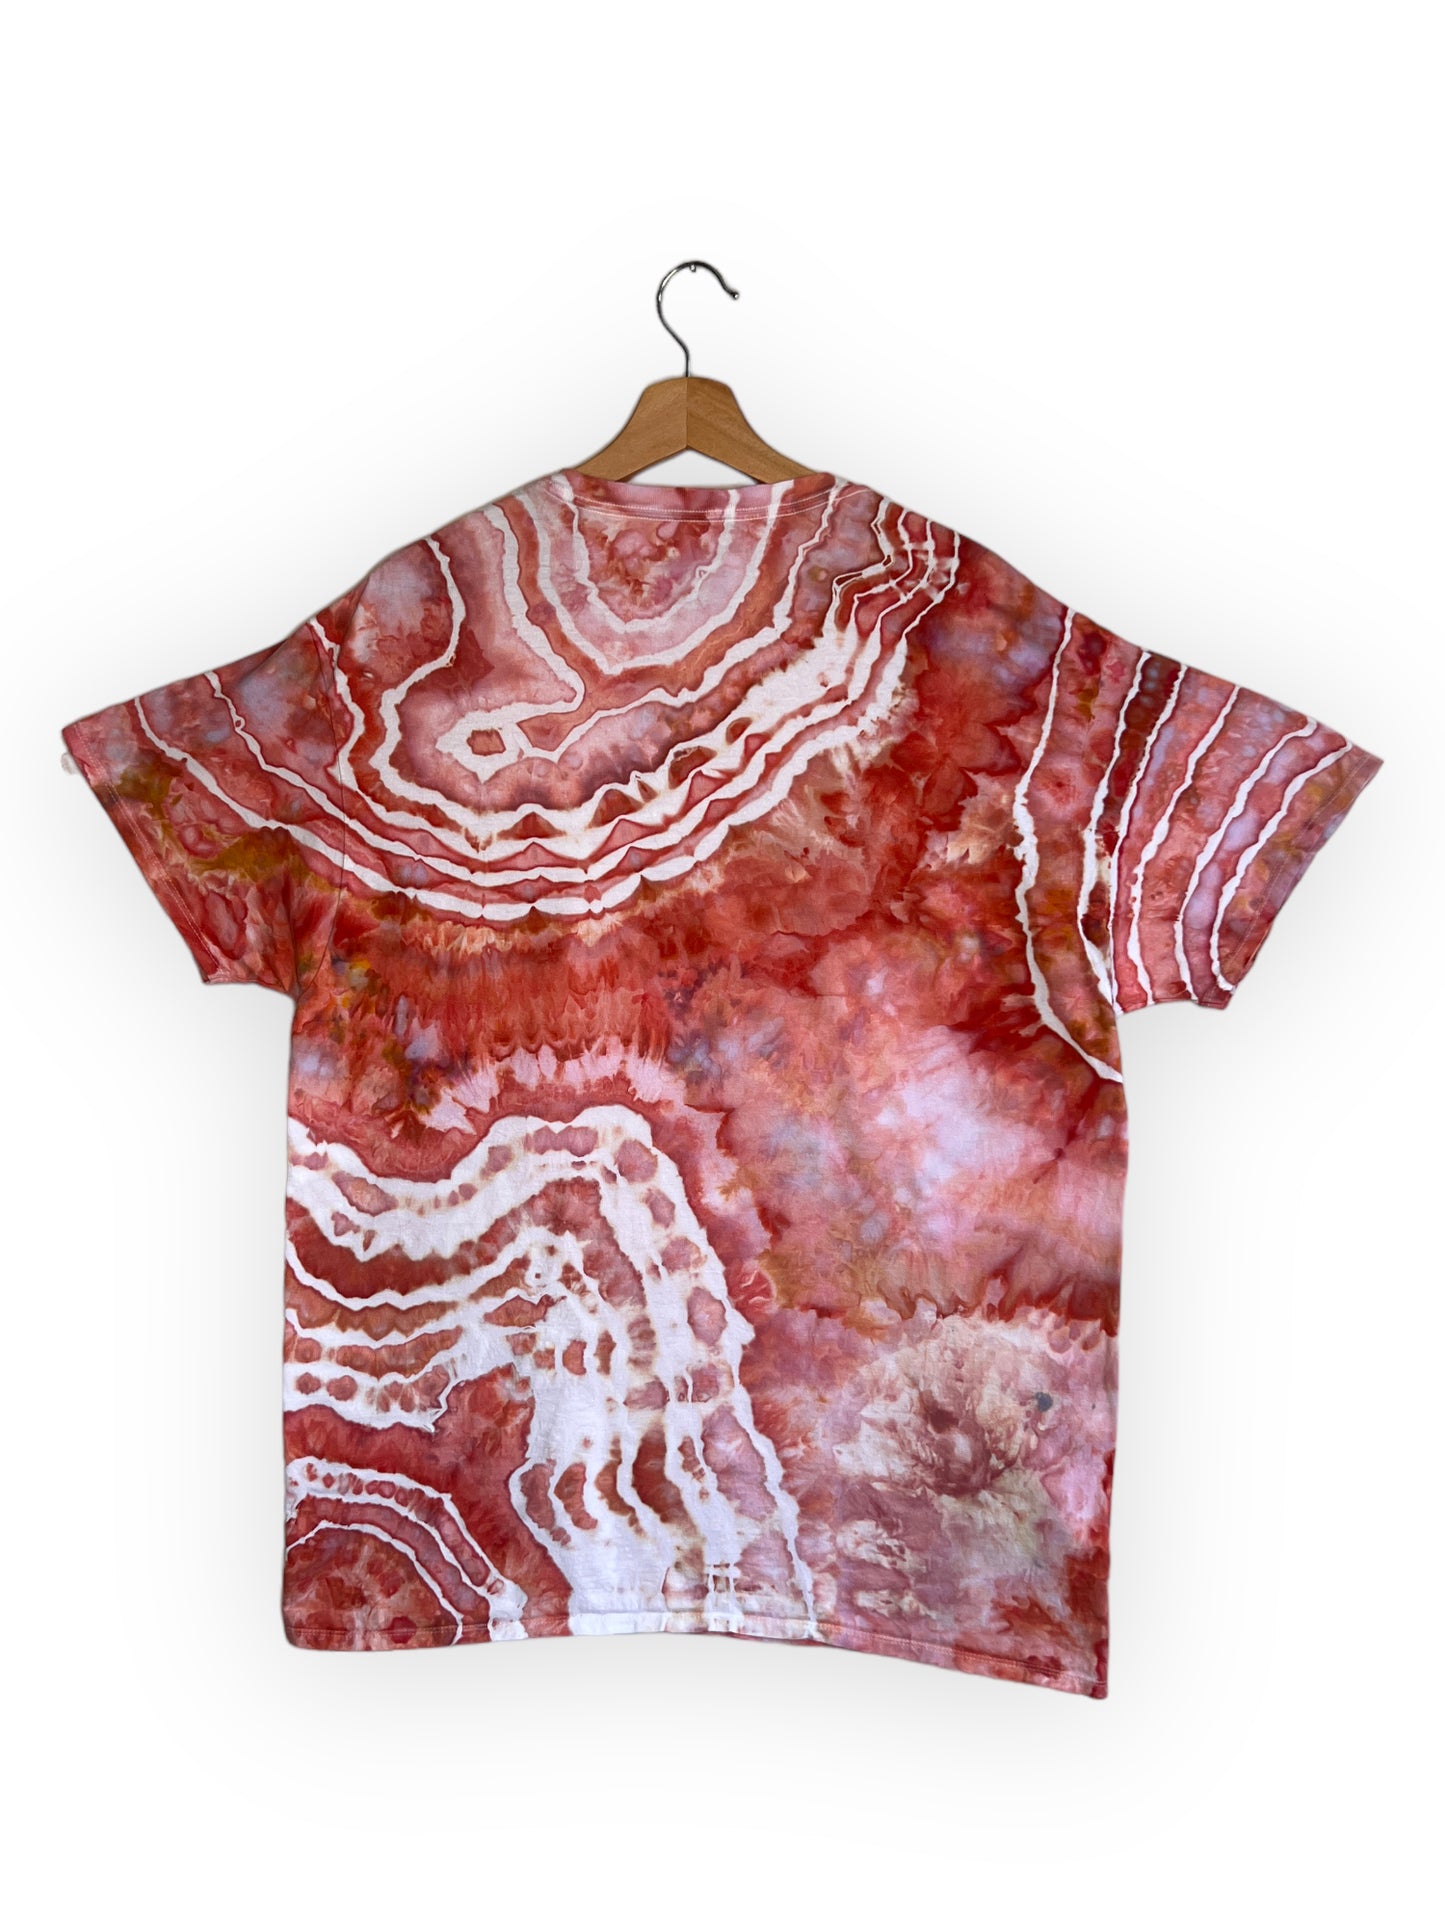 Terracotta Peach Geode T-Shirt (XL)